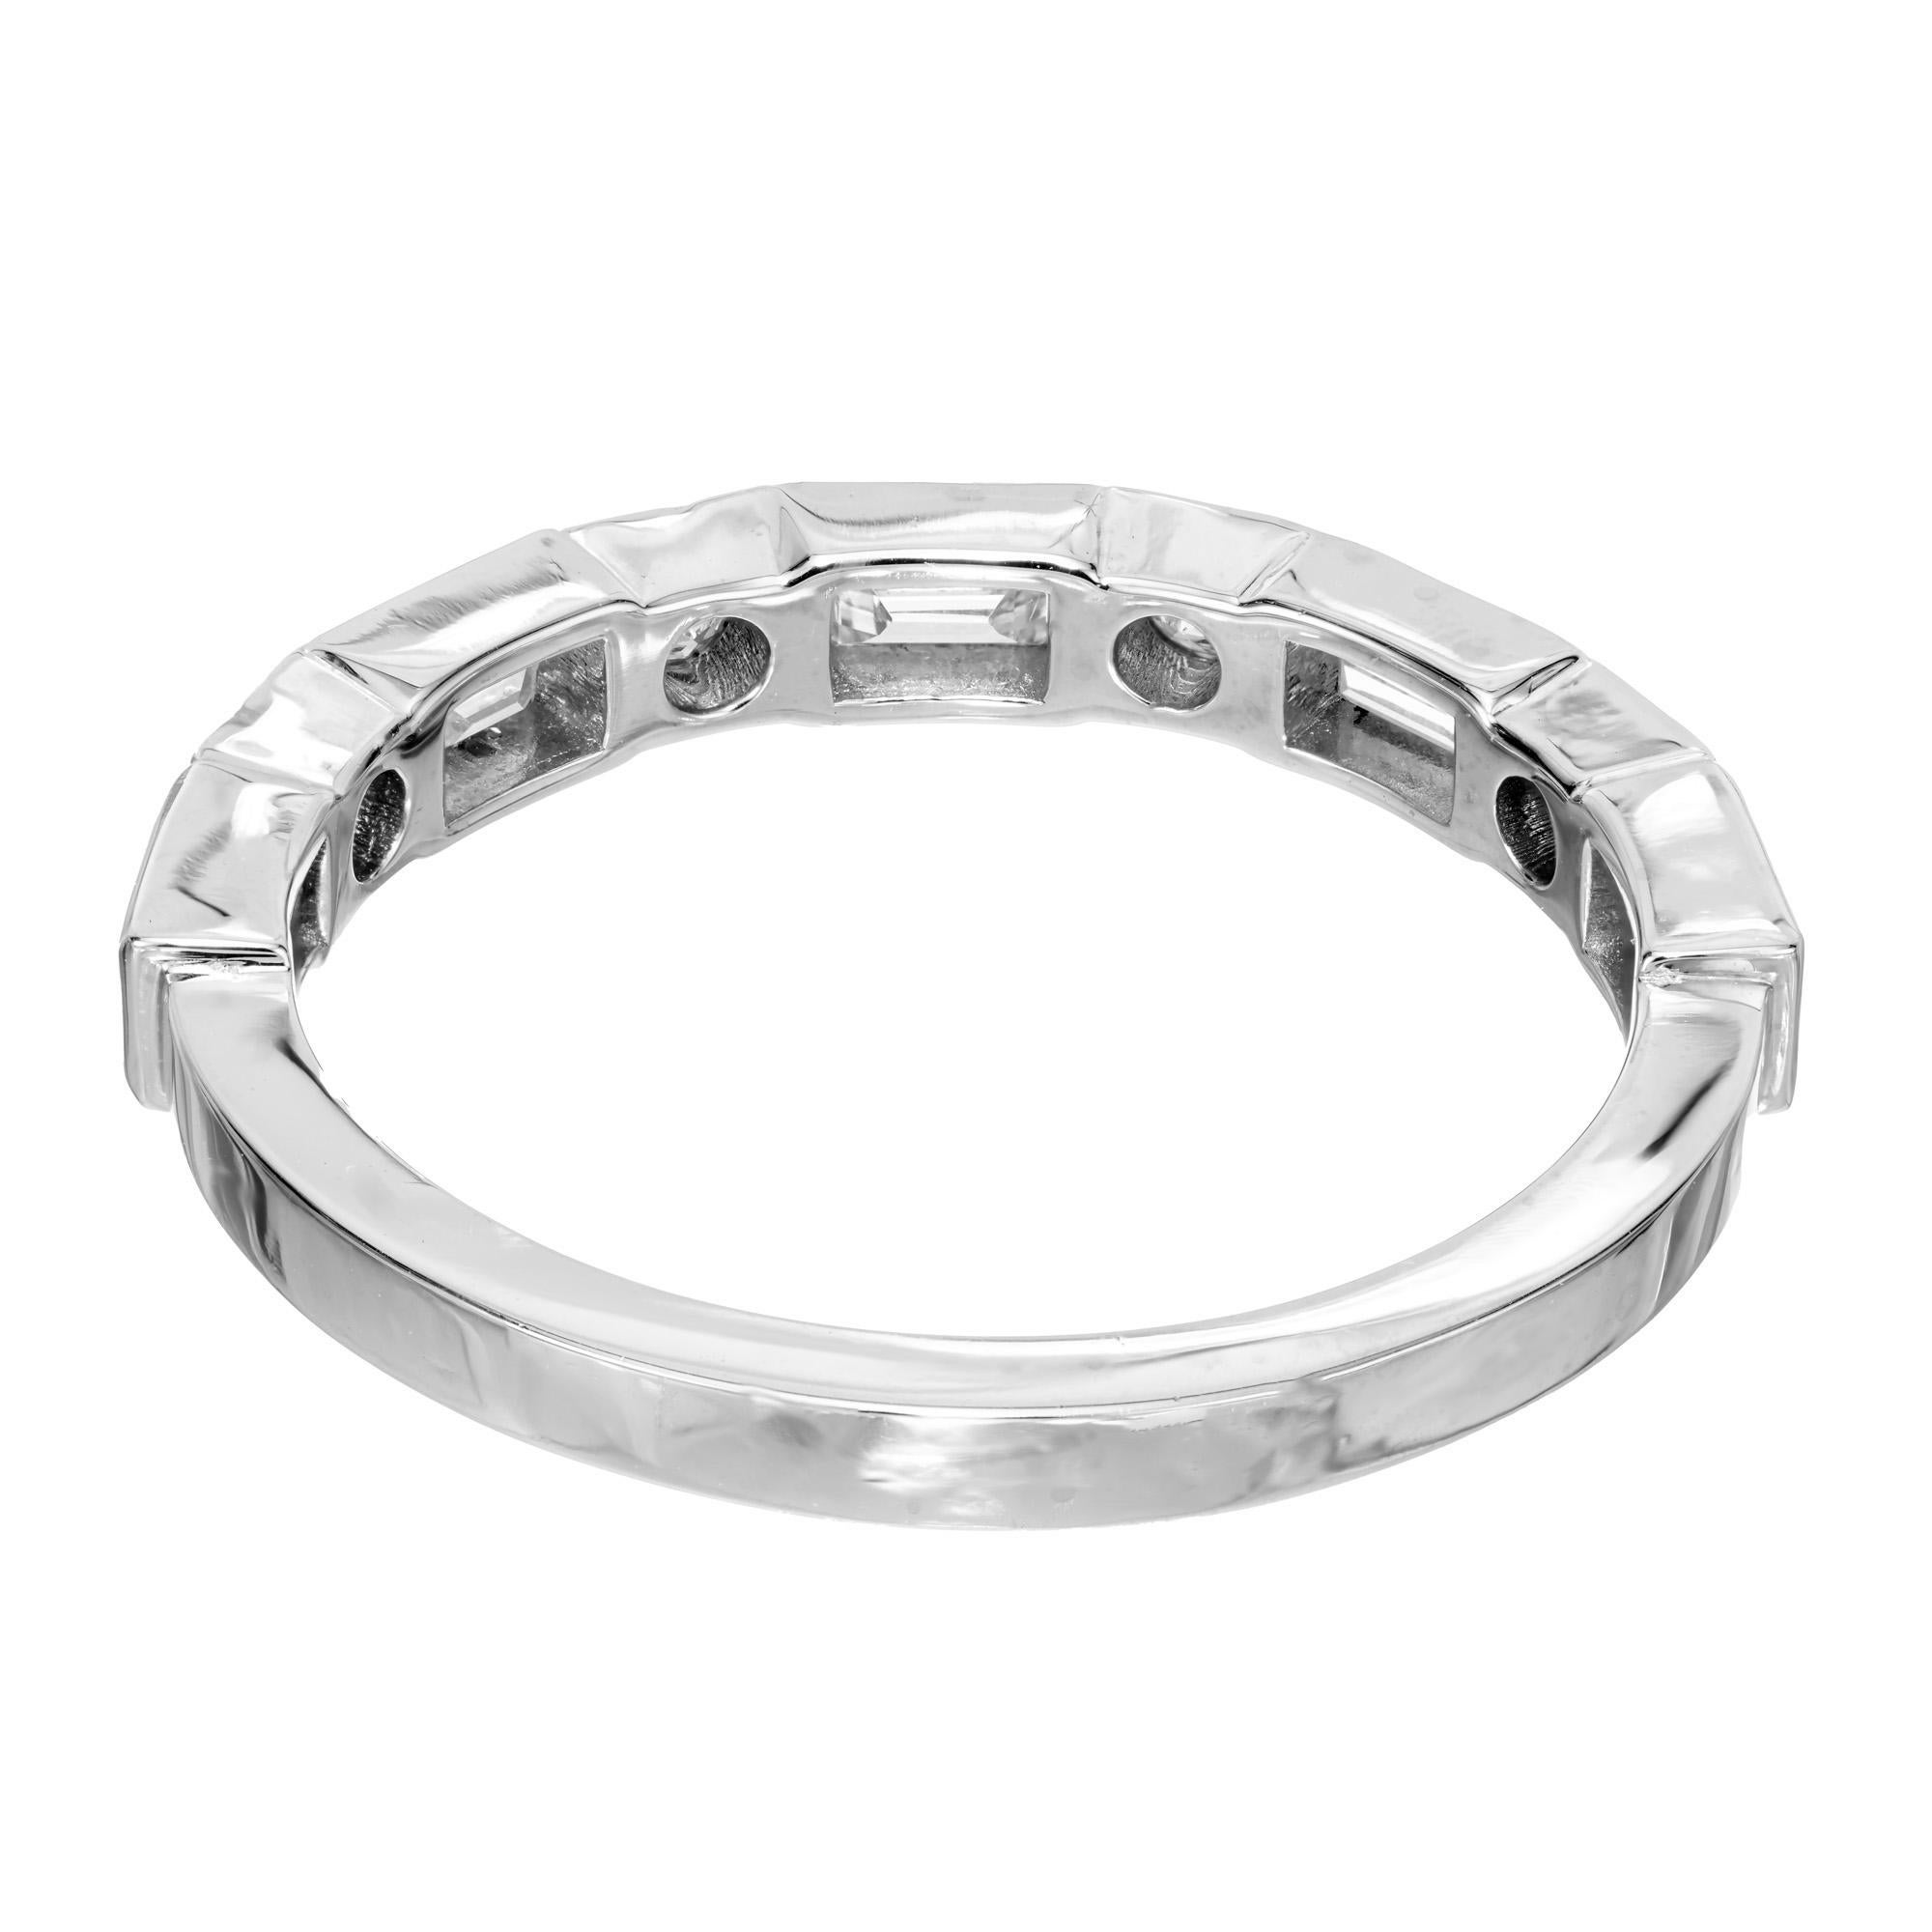 Women's Peter Suchy .43 Carat Diamond Platinum Wedding Band Ring